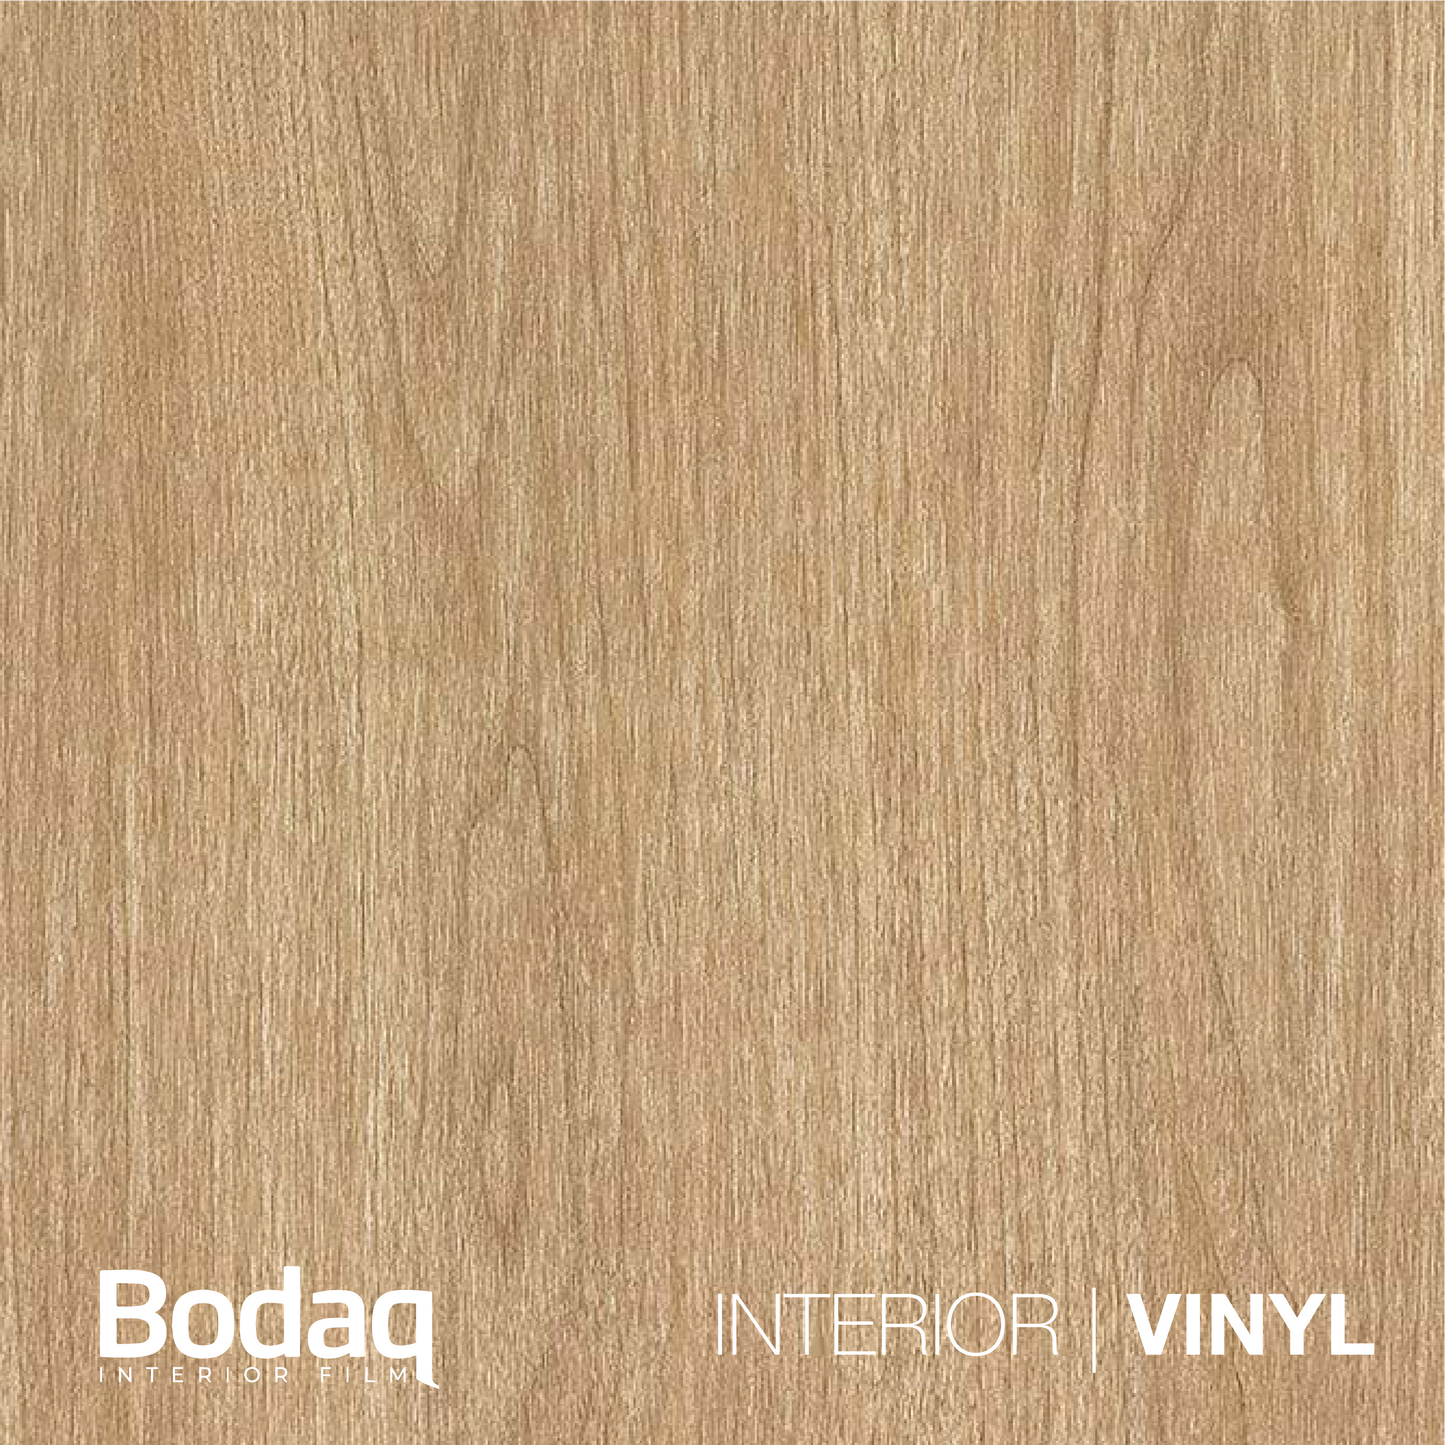 BODAQ Interior Film XP118 Premium Wood - A5 Sample